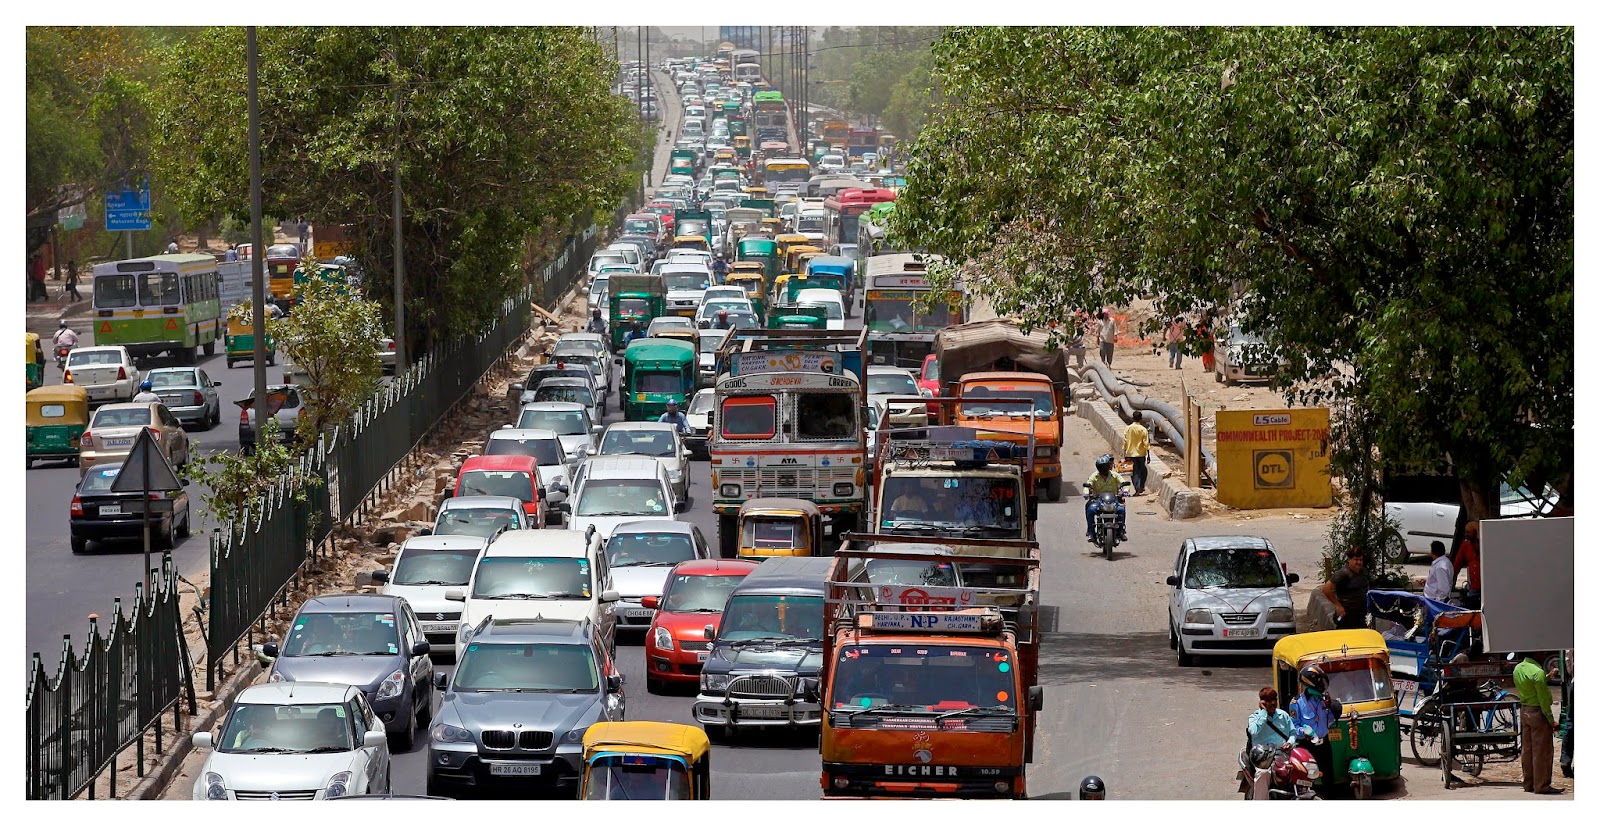 Vehicles on India